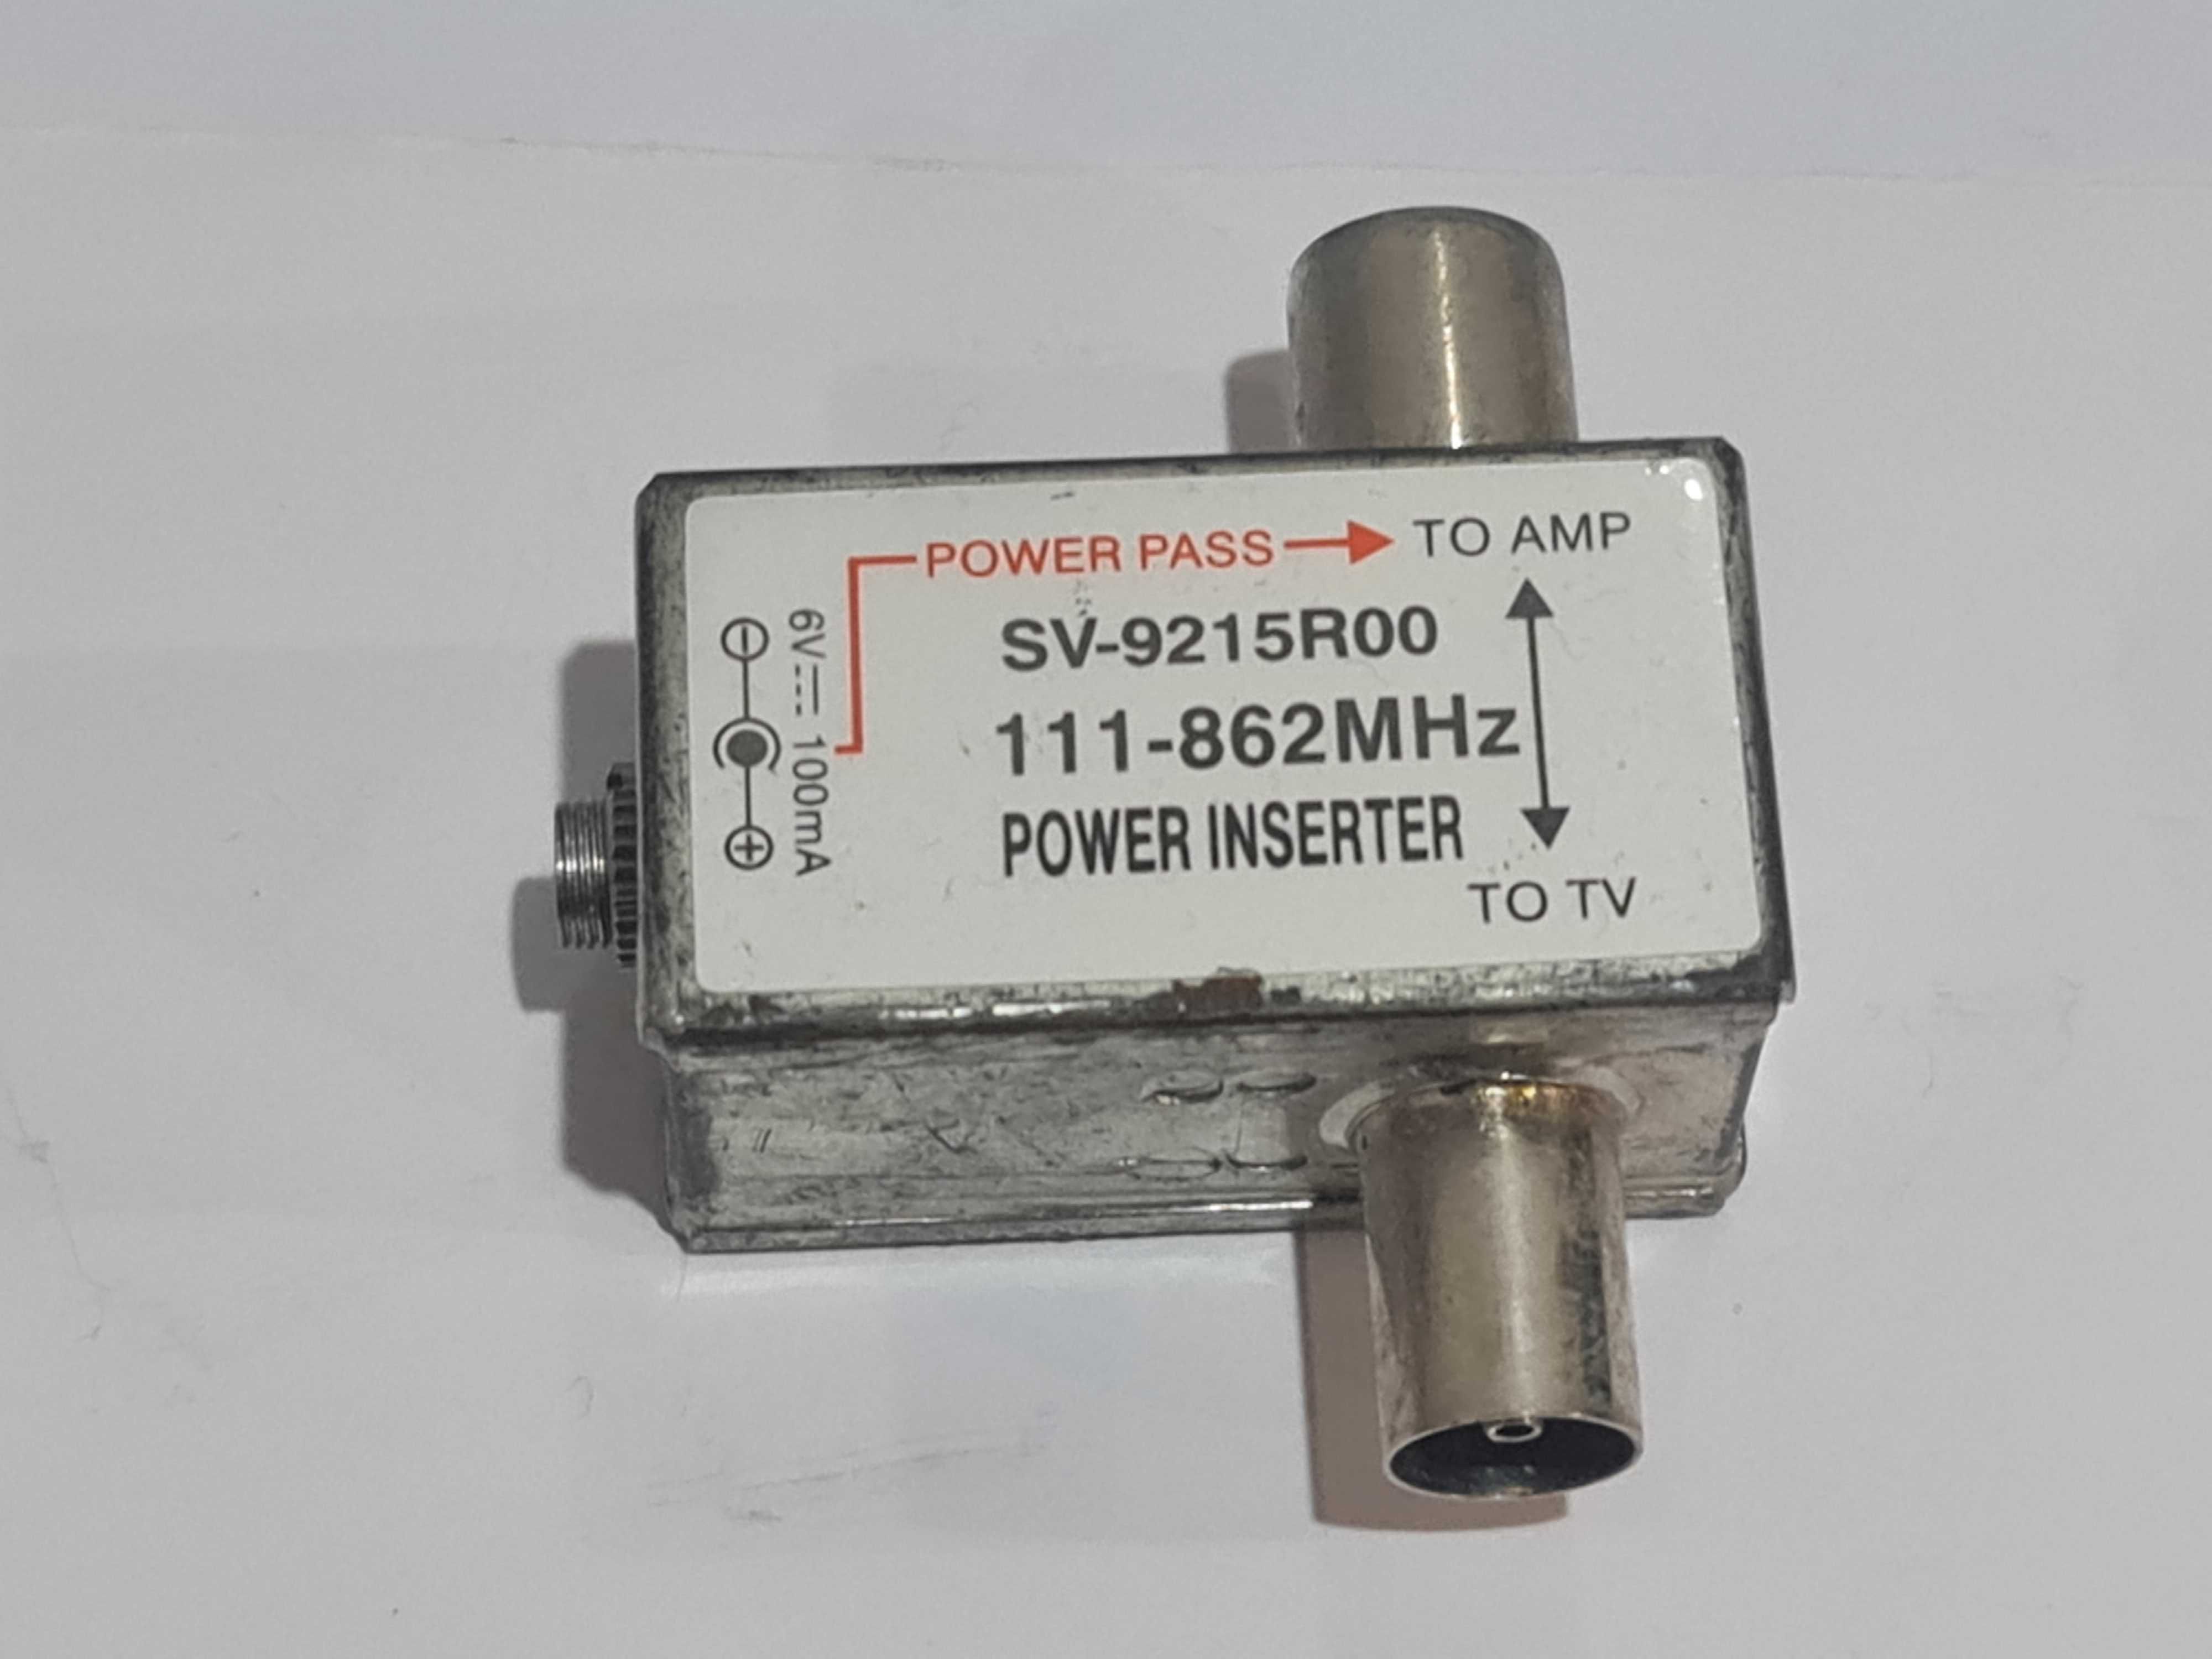 Power inserter para TV SV-9215